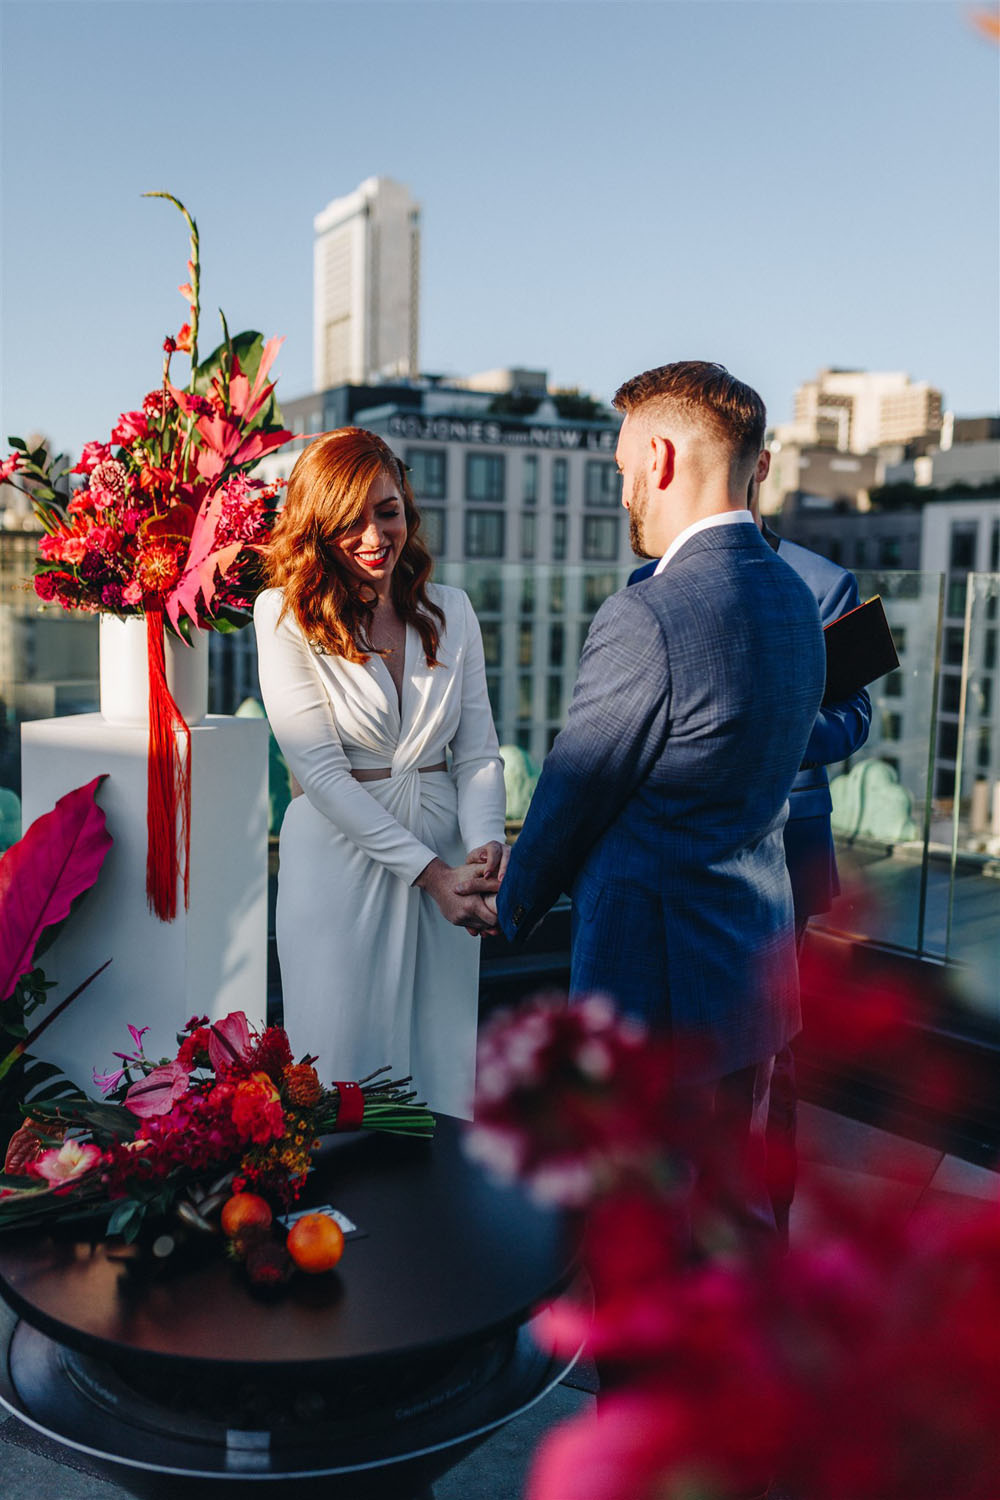 Modern rooftop wedding at the San Francisco Proper Hotel